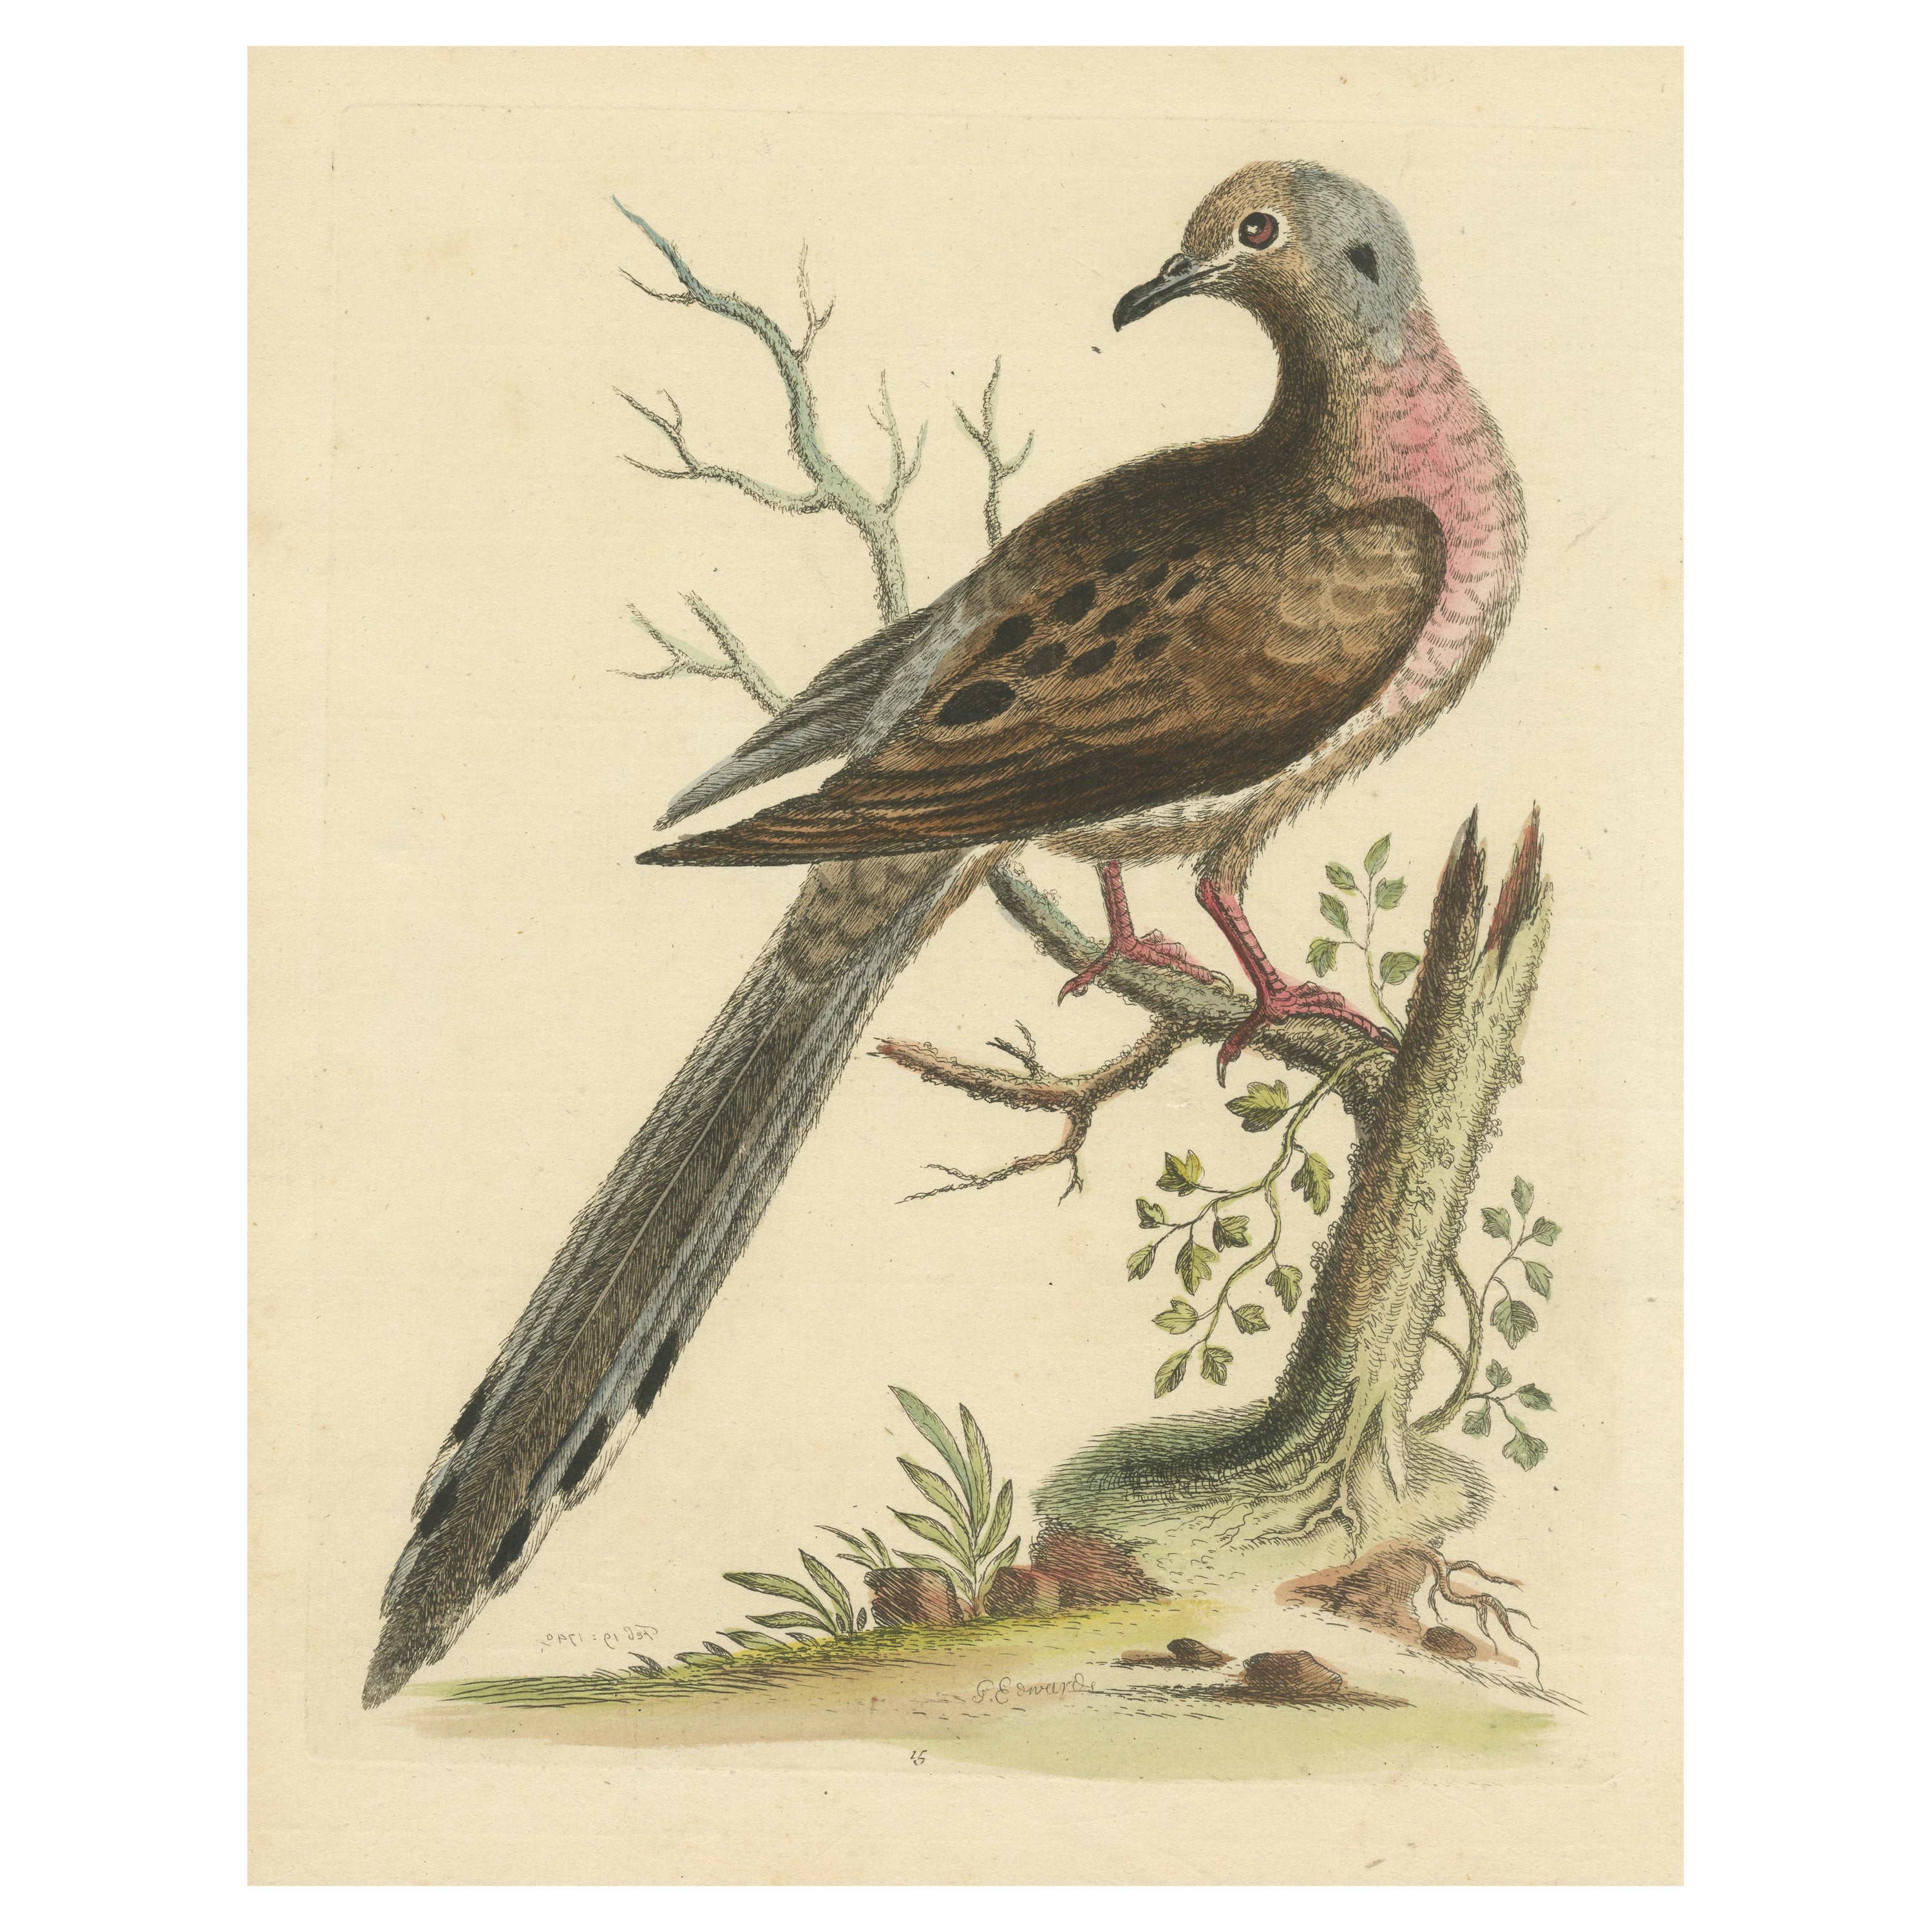 Antique Bird Print of the Passenger Pigeon or Wild Pigeon